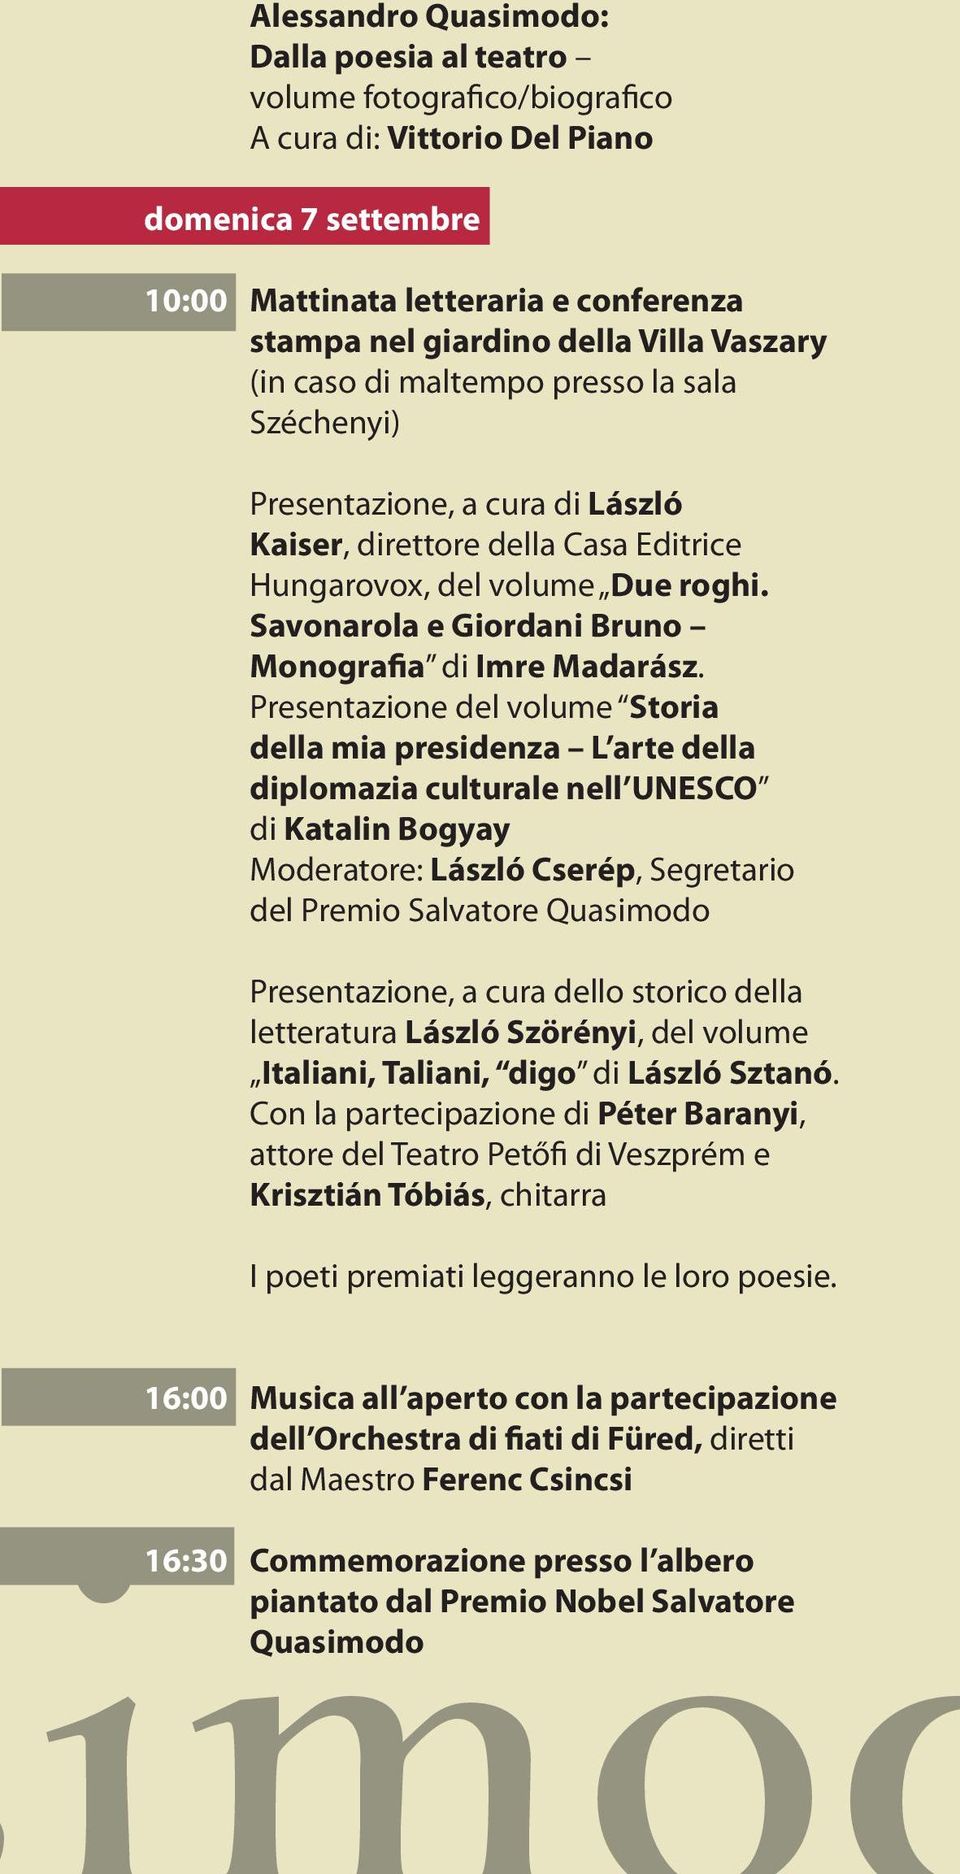 Savonarola e Giordani Bruno Monografia di Imre Madarász.